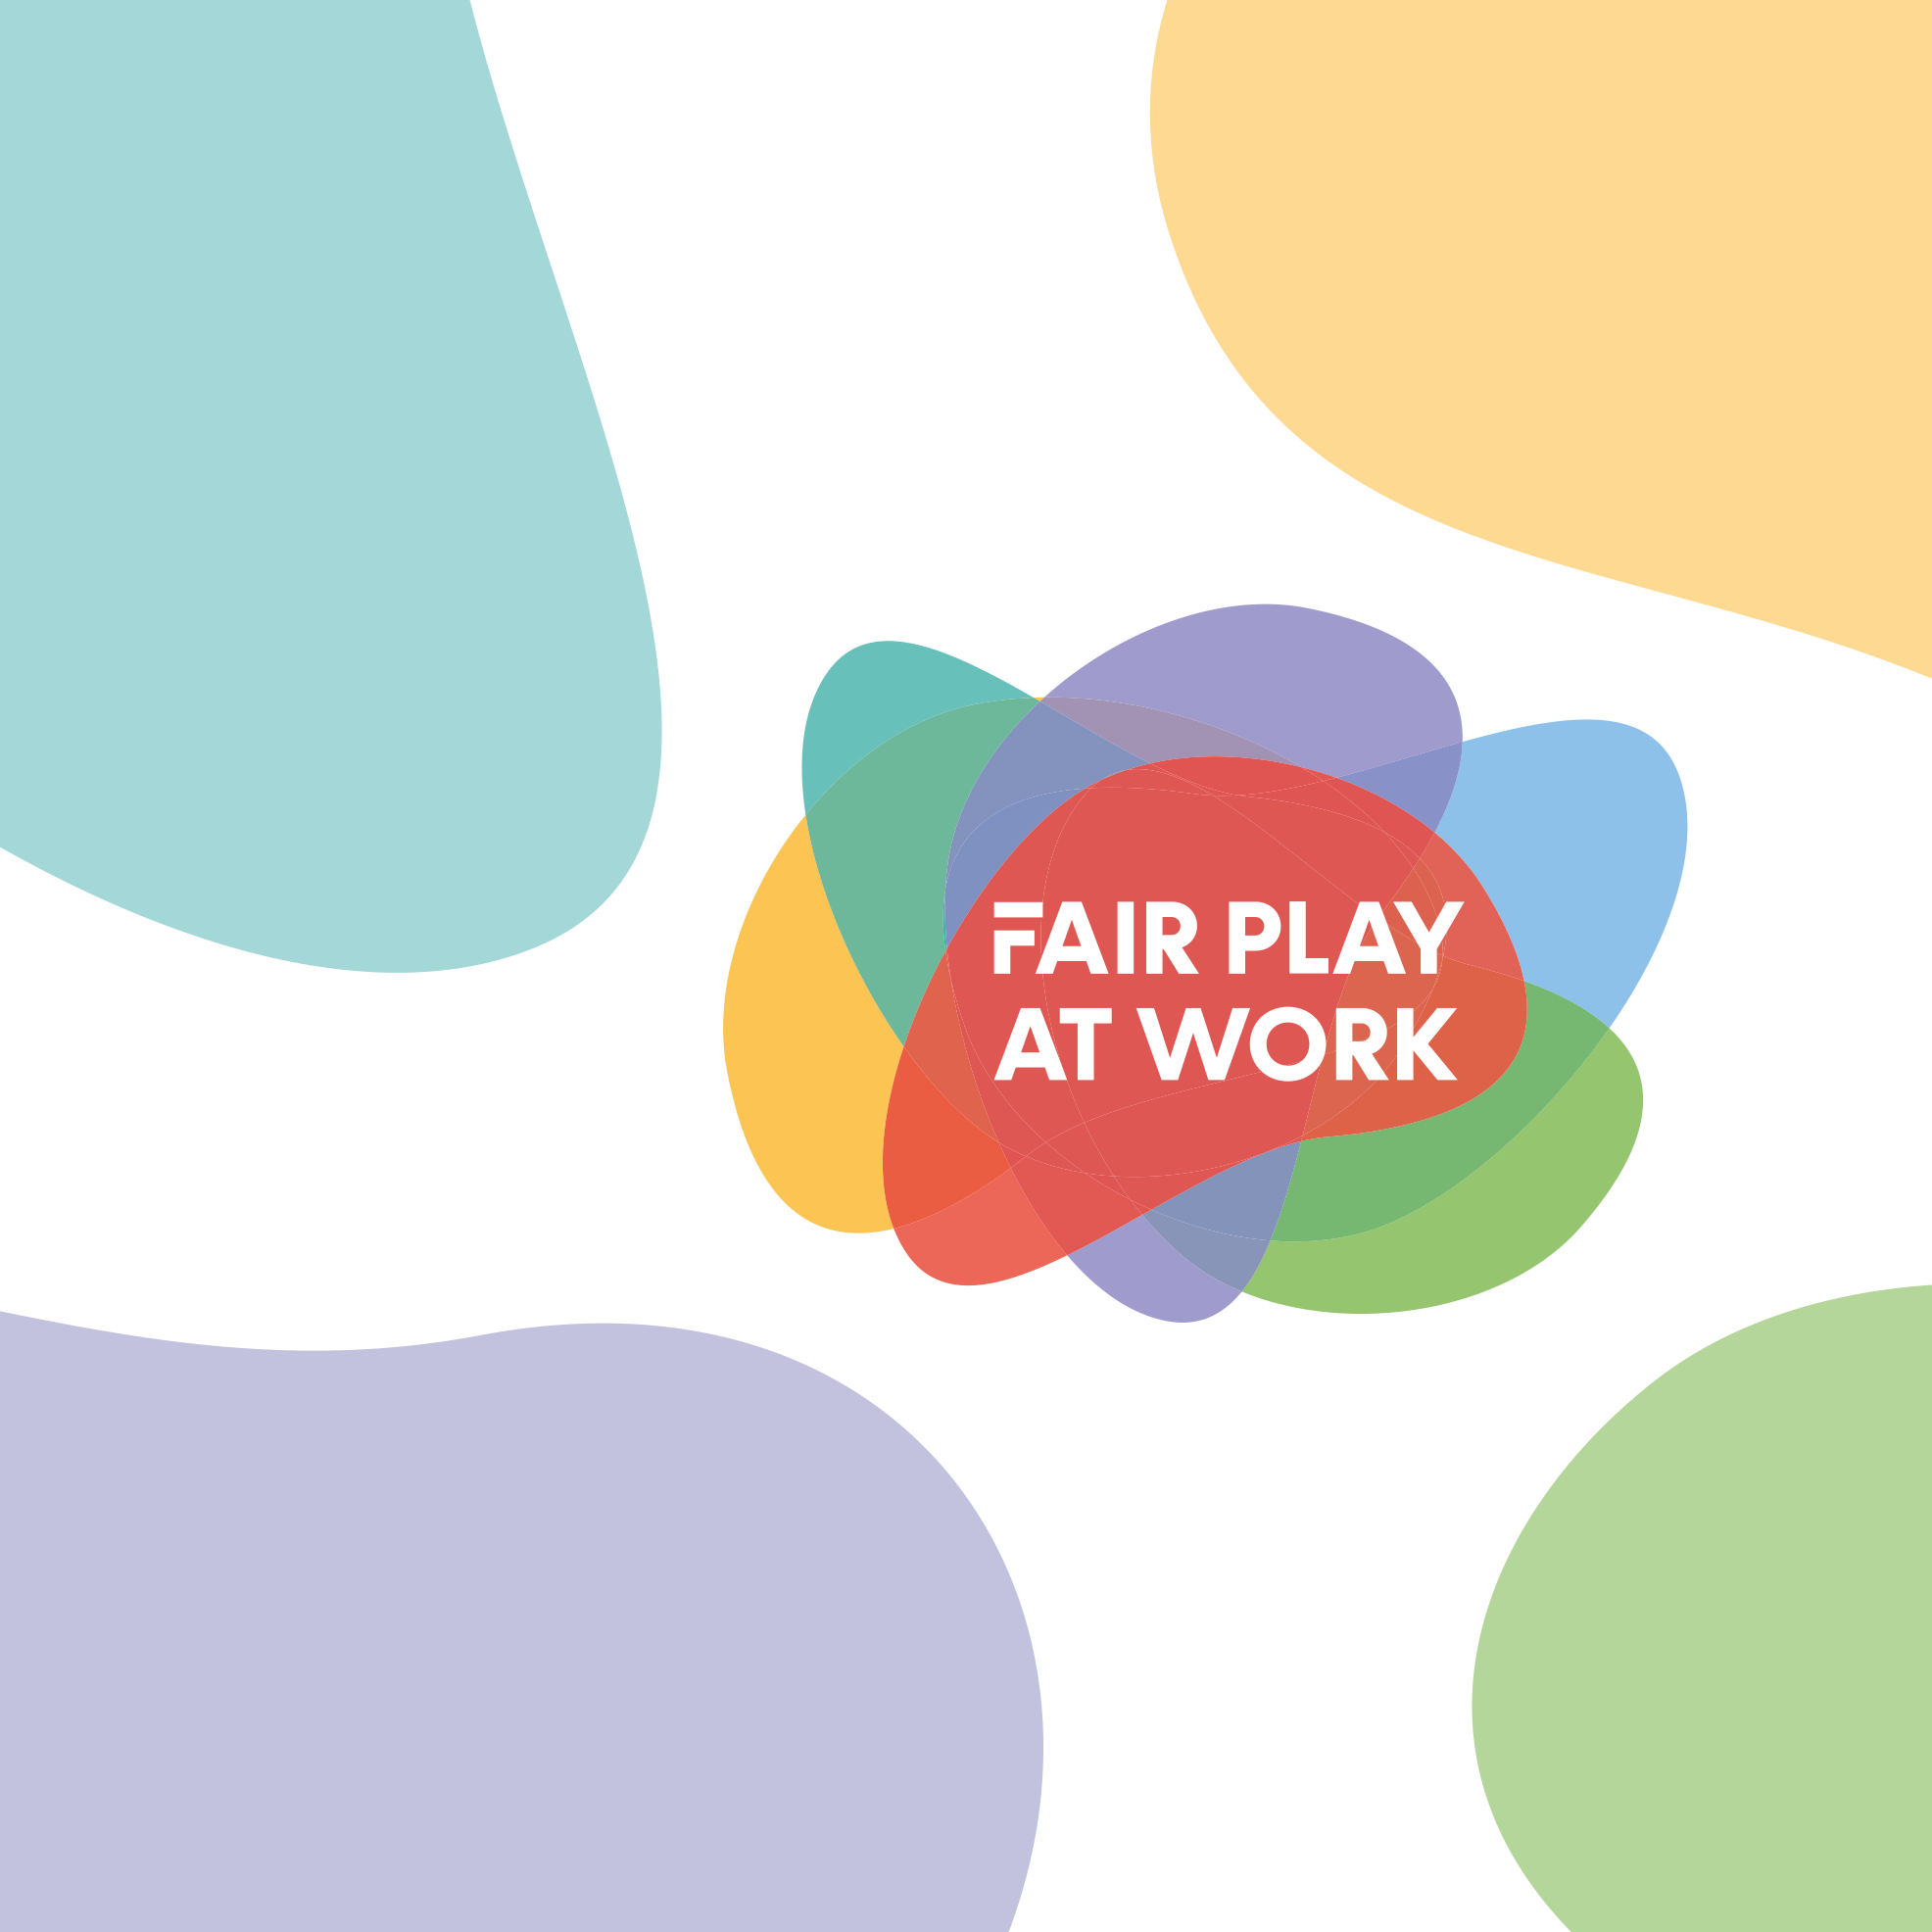 Monivärinen Fair play at work -logo värillisten pintojen ympäröimänä.